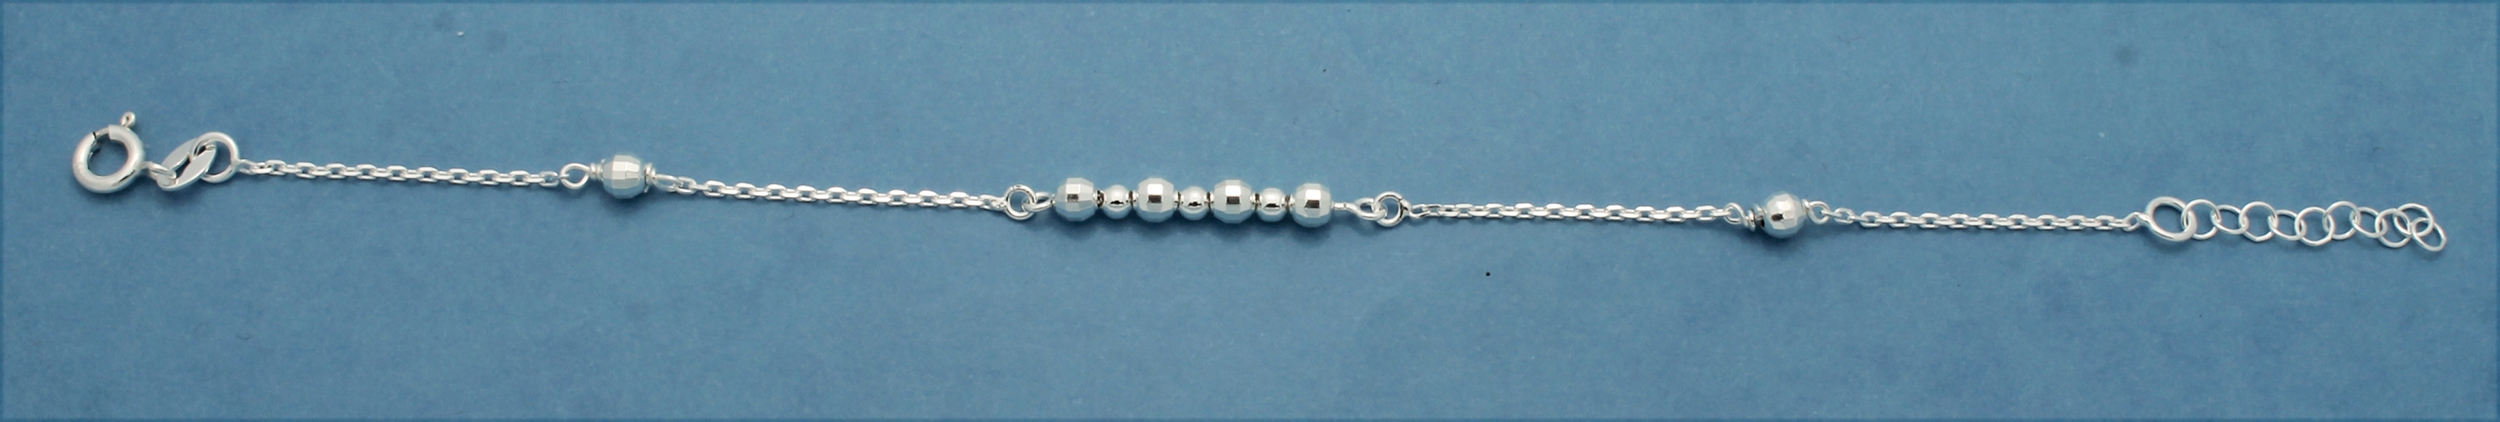 S113068B/1 Silver Charm Bracelet